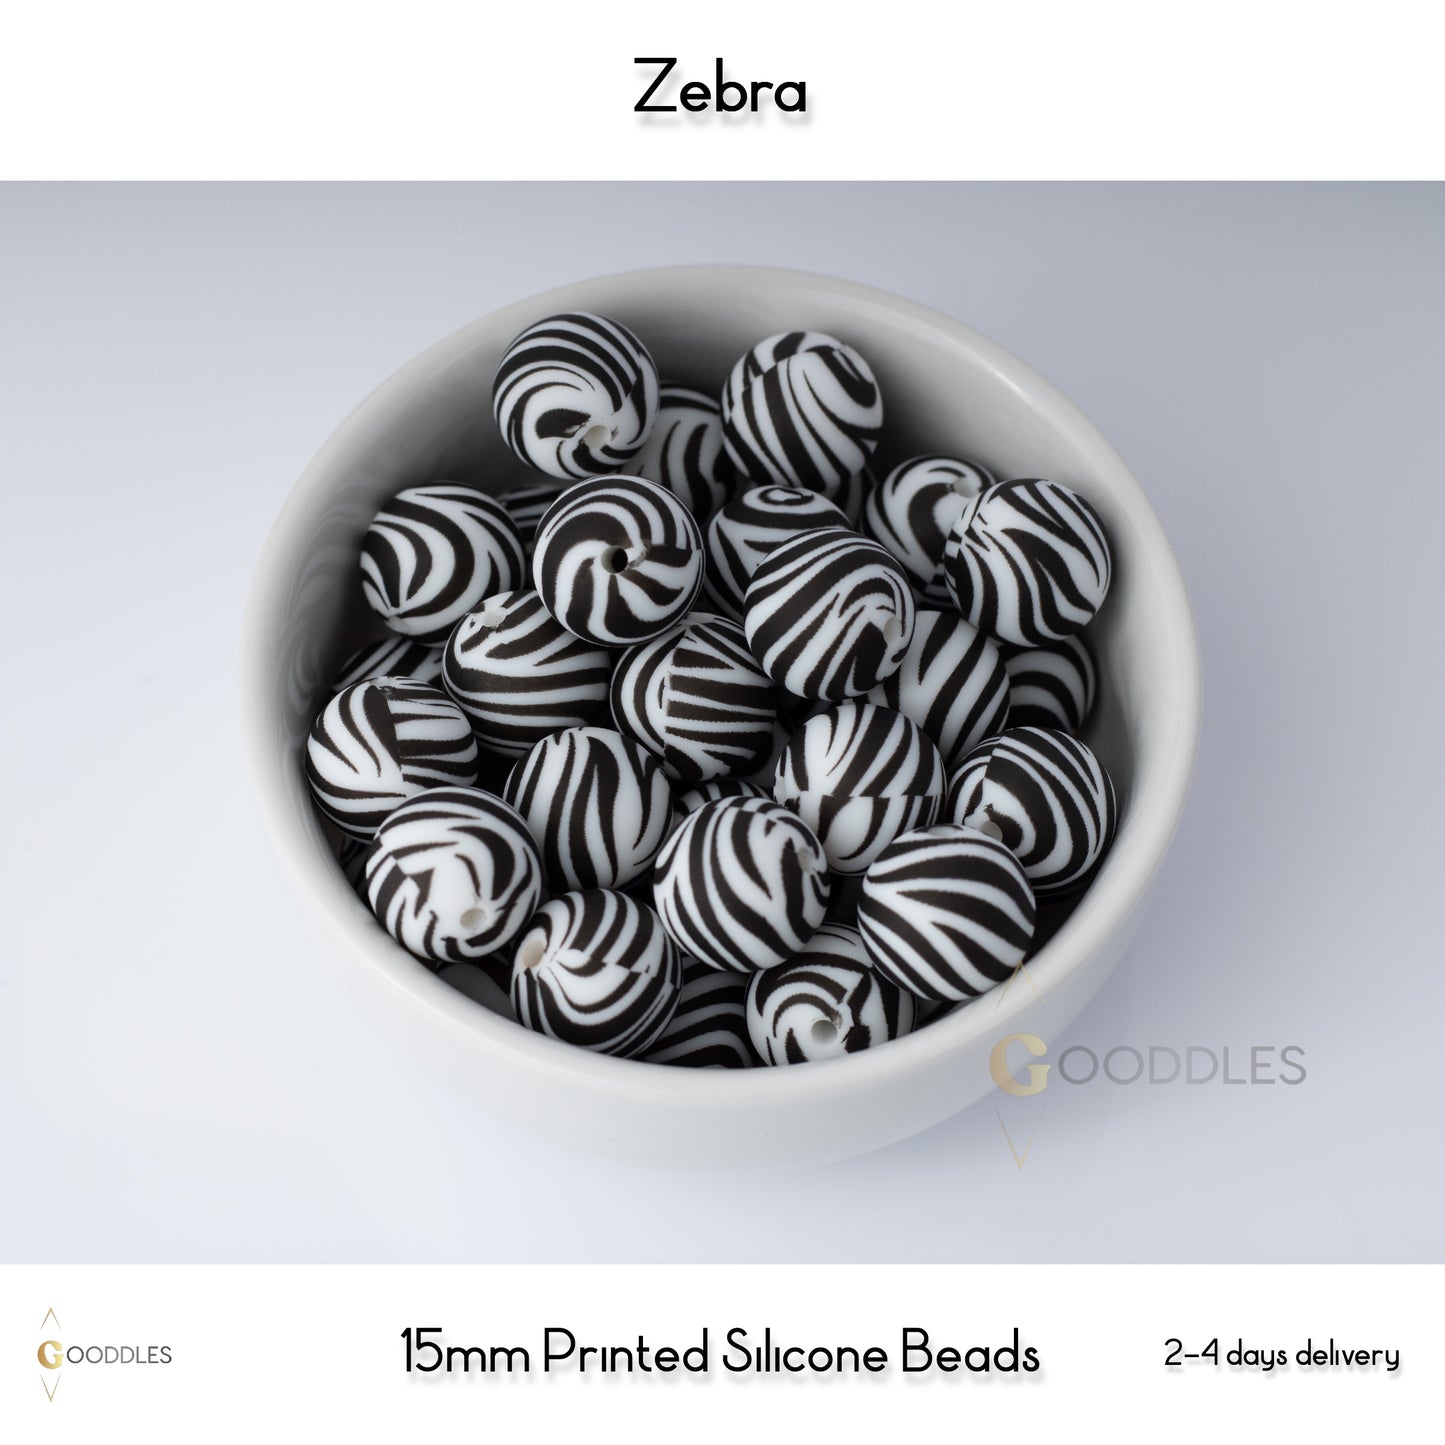 5pcs, Zebra Silicone Beads Printed Round Silicone Beads